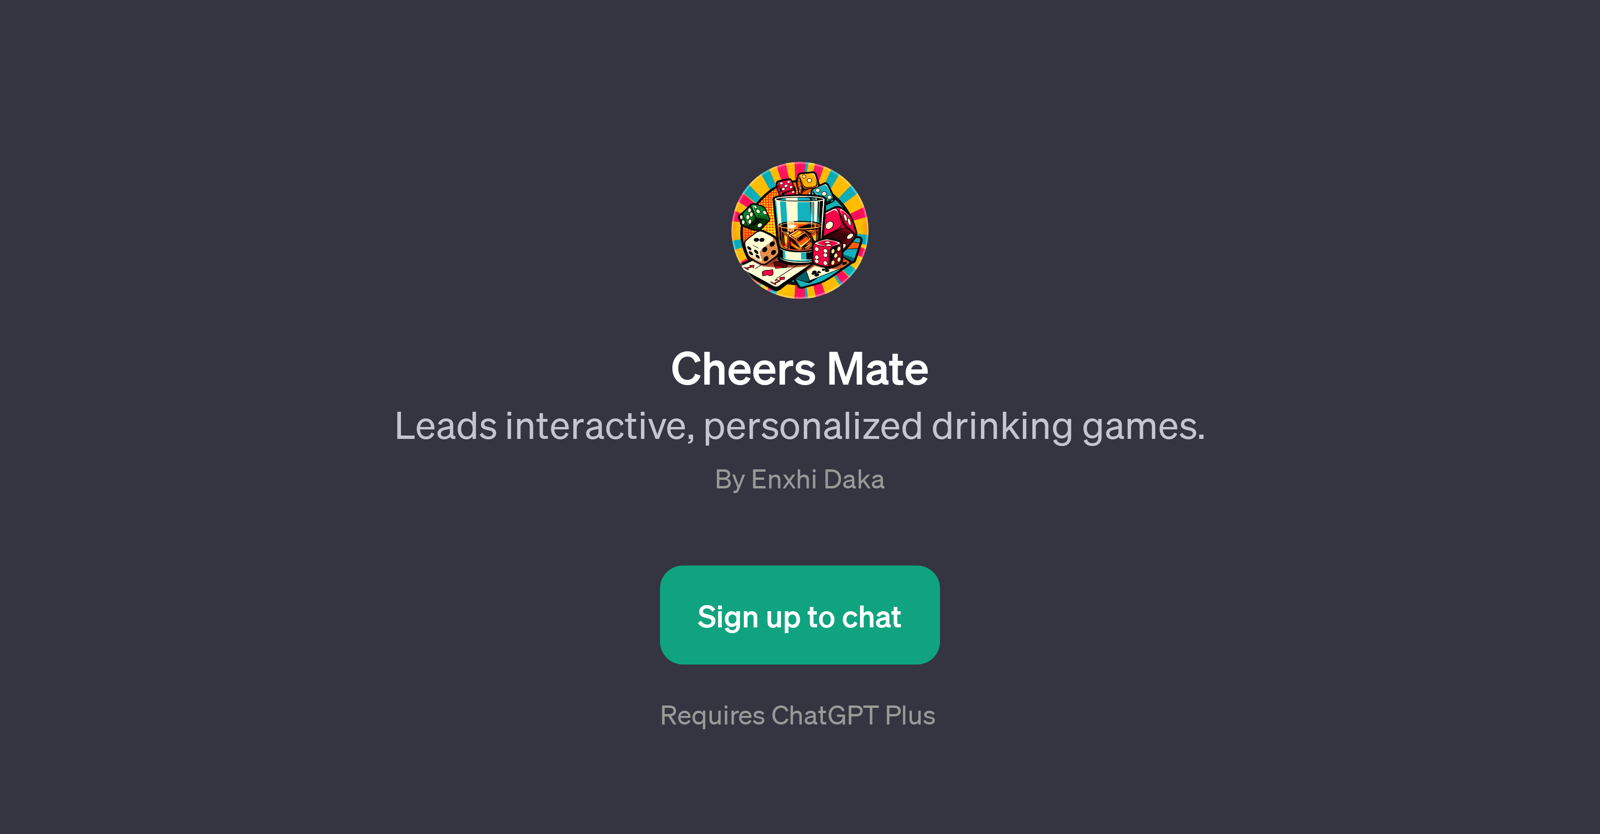 Cheers Mate website